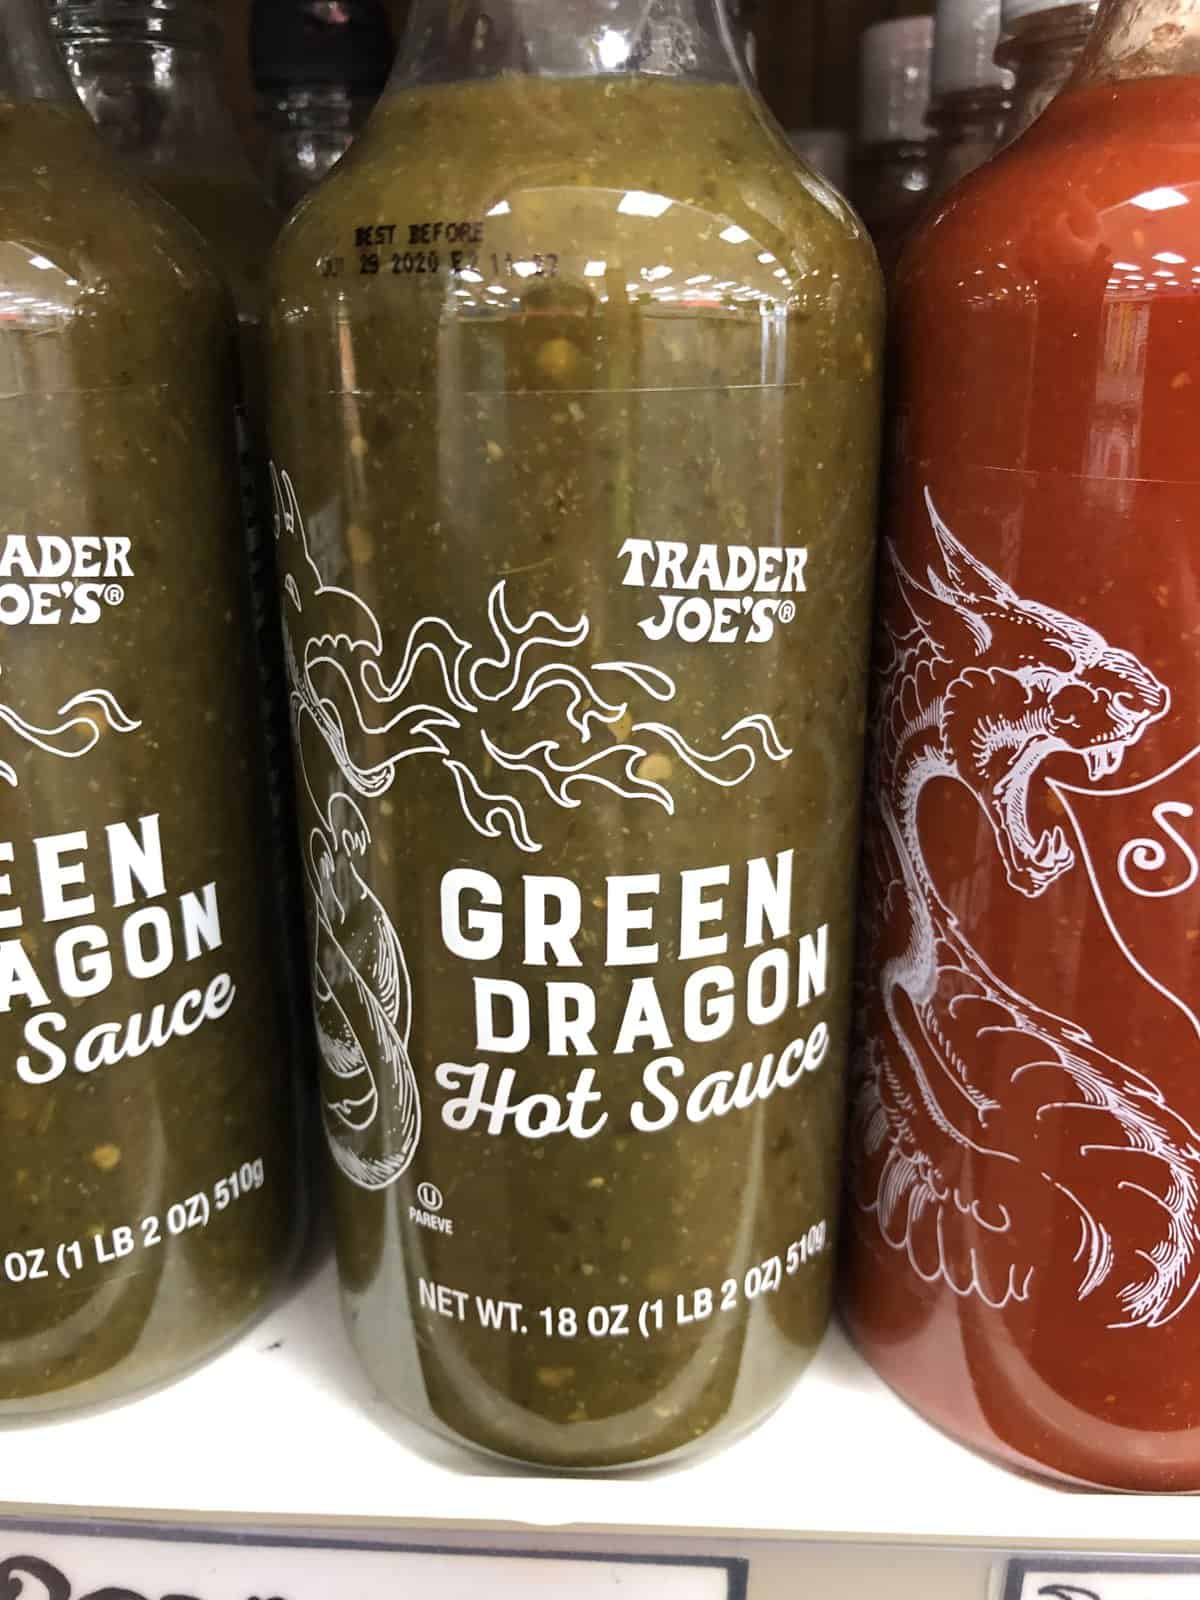 Green Dragon Hot Sauce The Best Keto Products at Trader Joe's